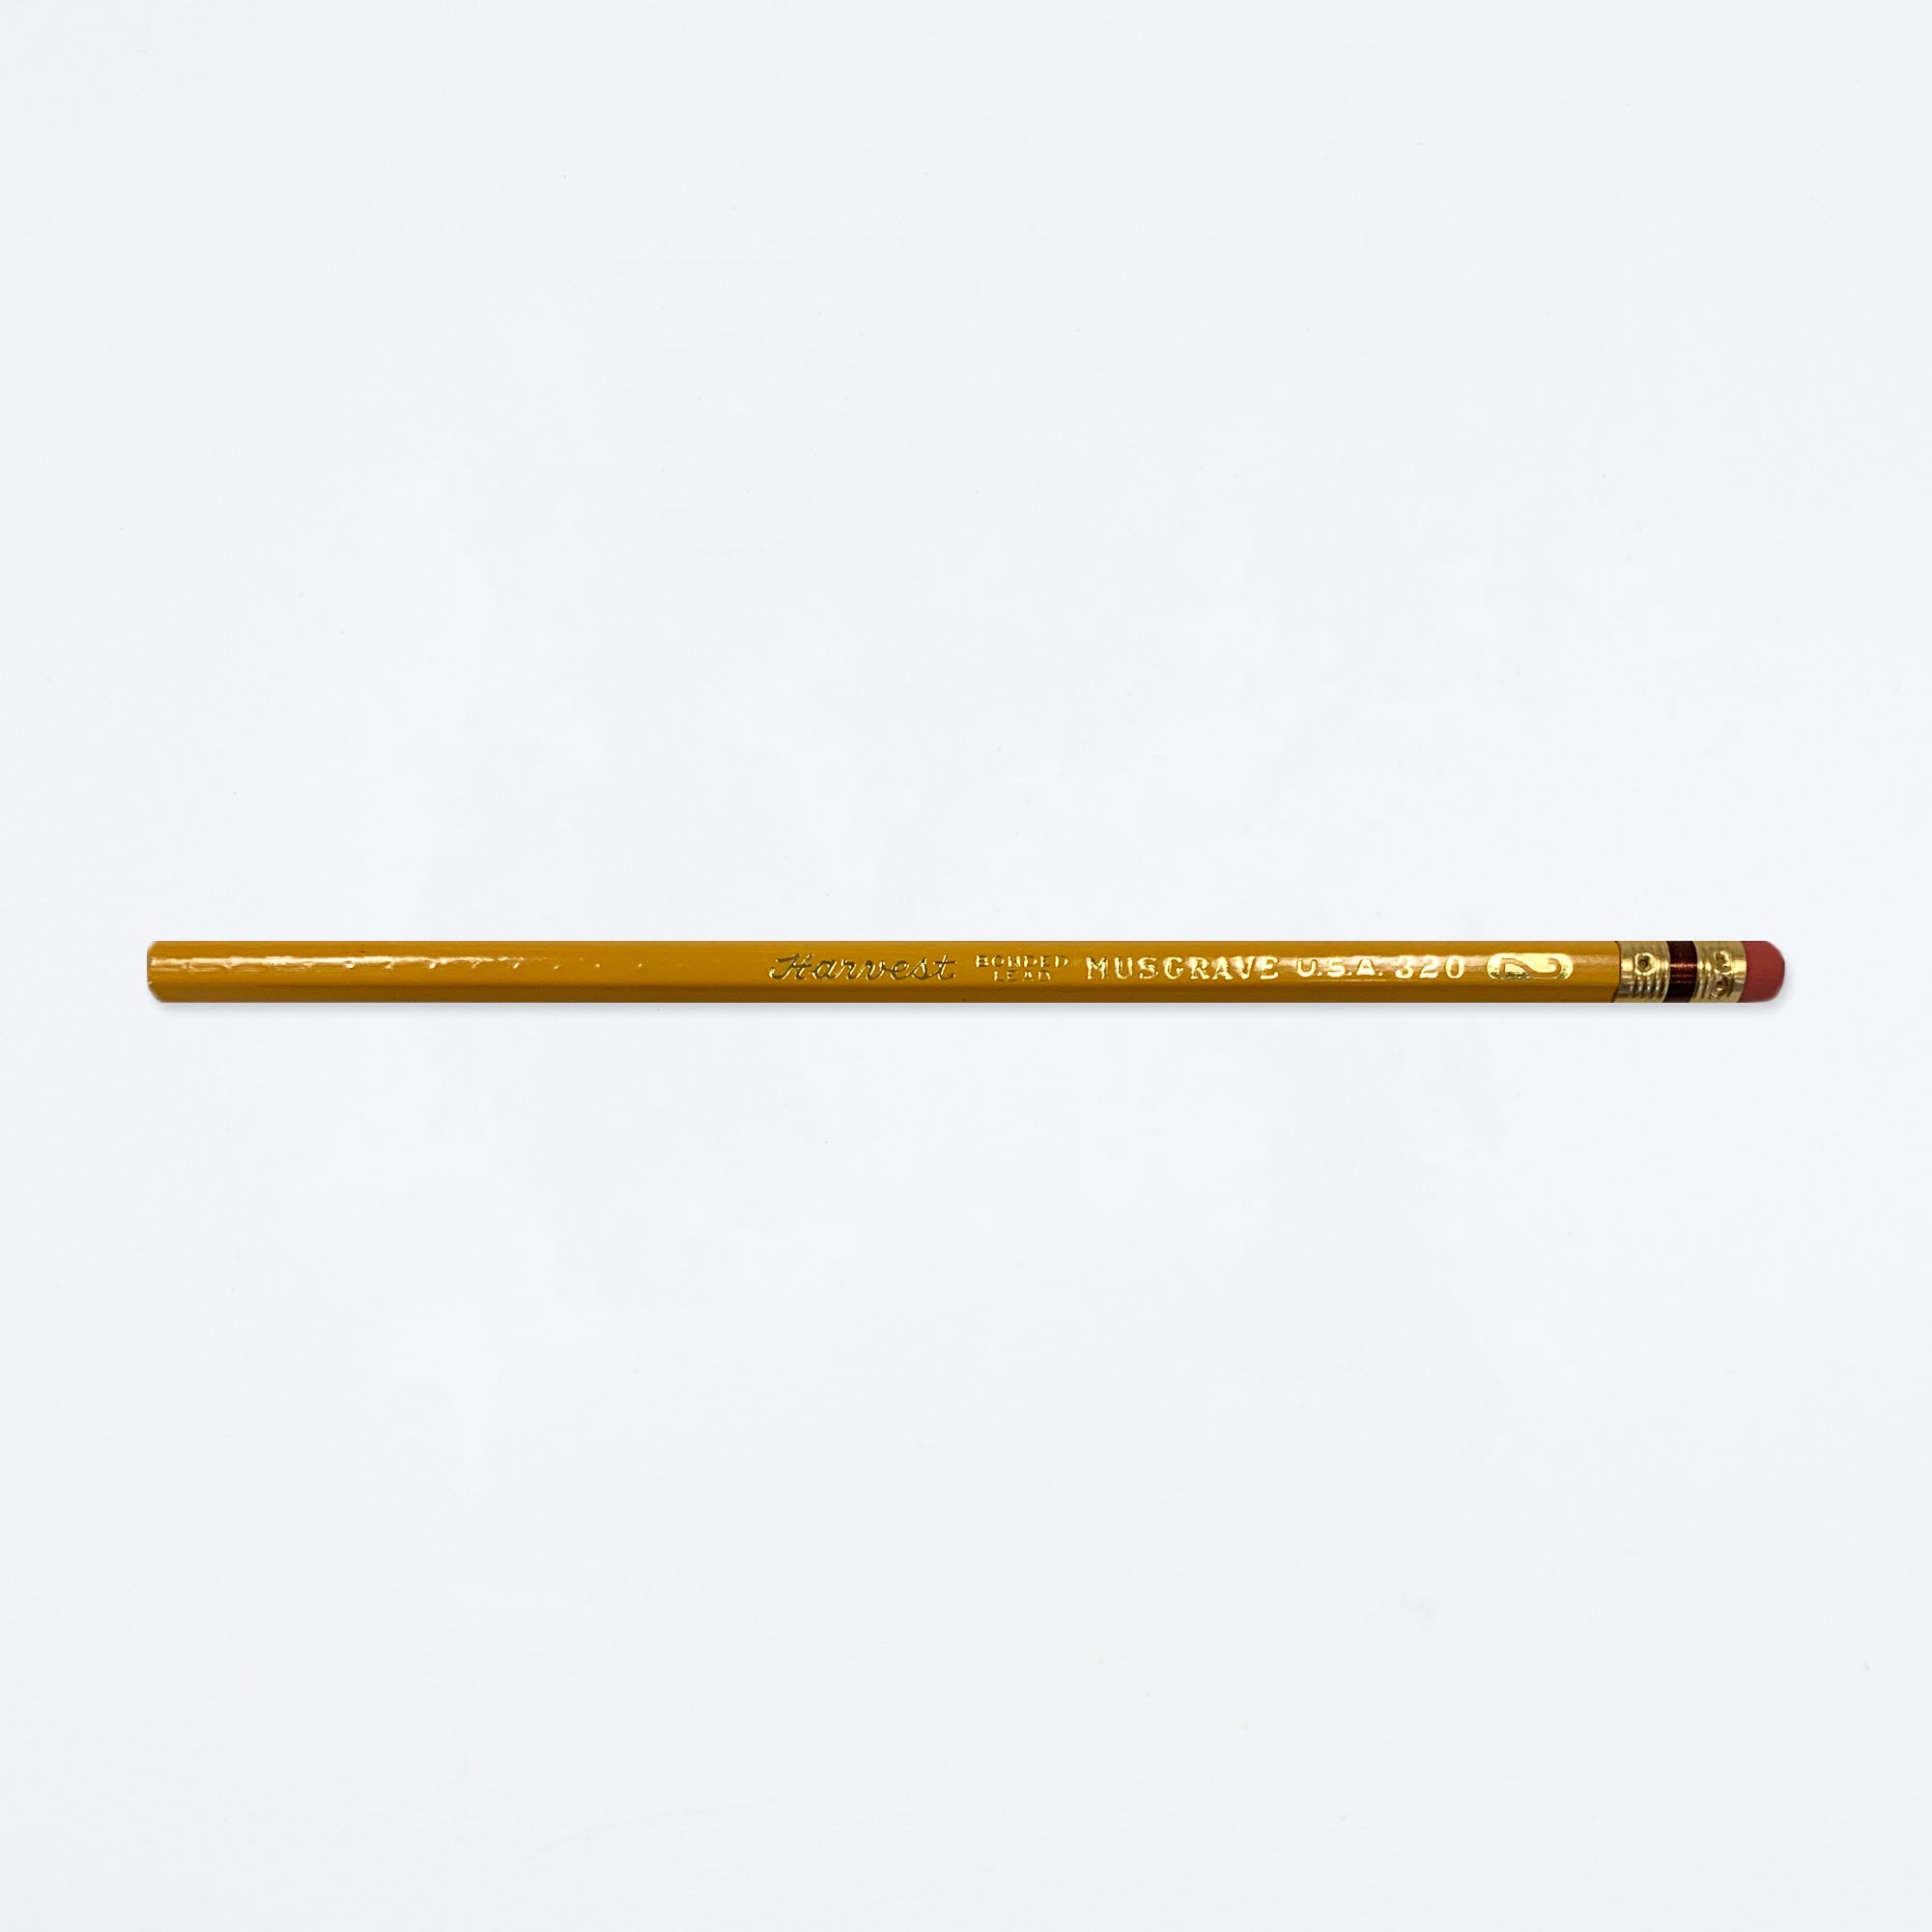 Harvest 320 Pencil